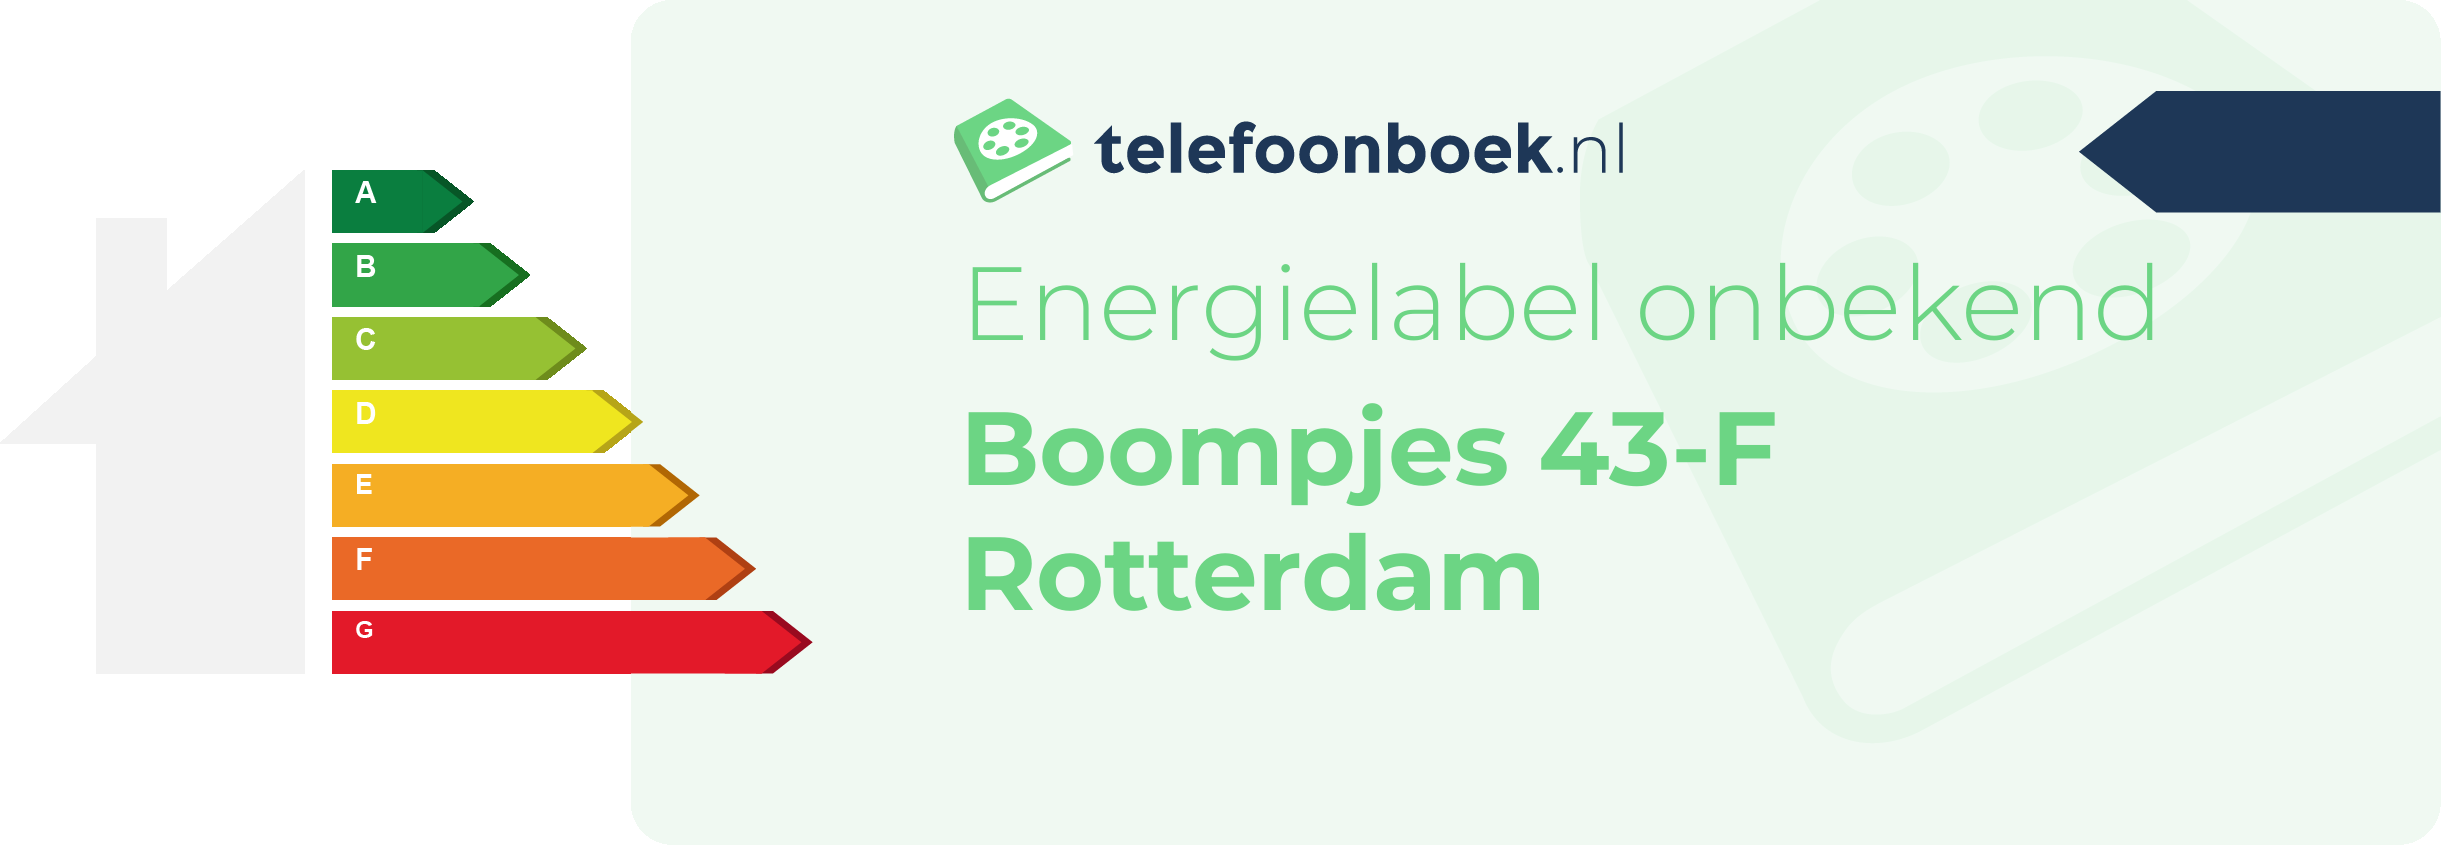 Energielabel Boompjes 43-F Rotterdam